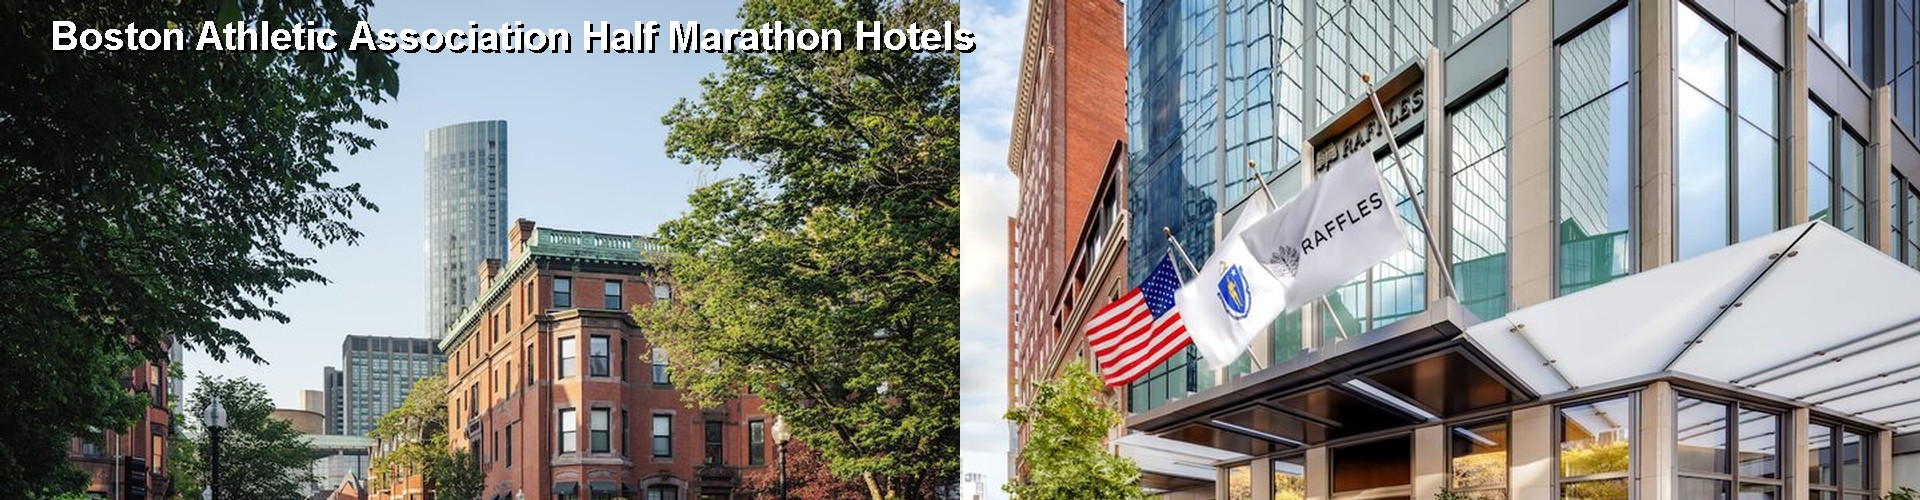 5 Best Hotels near Boston Athletic Association Half Marathon